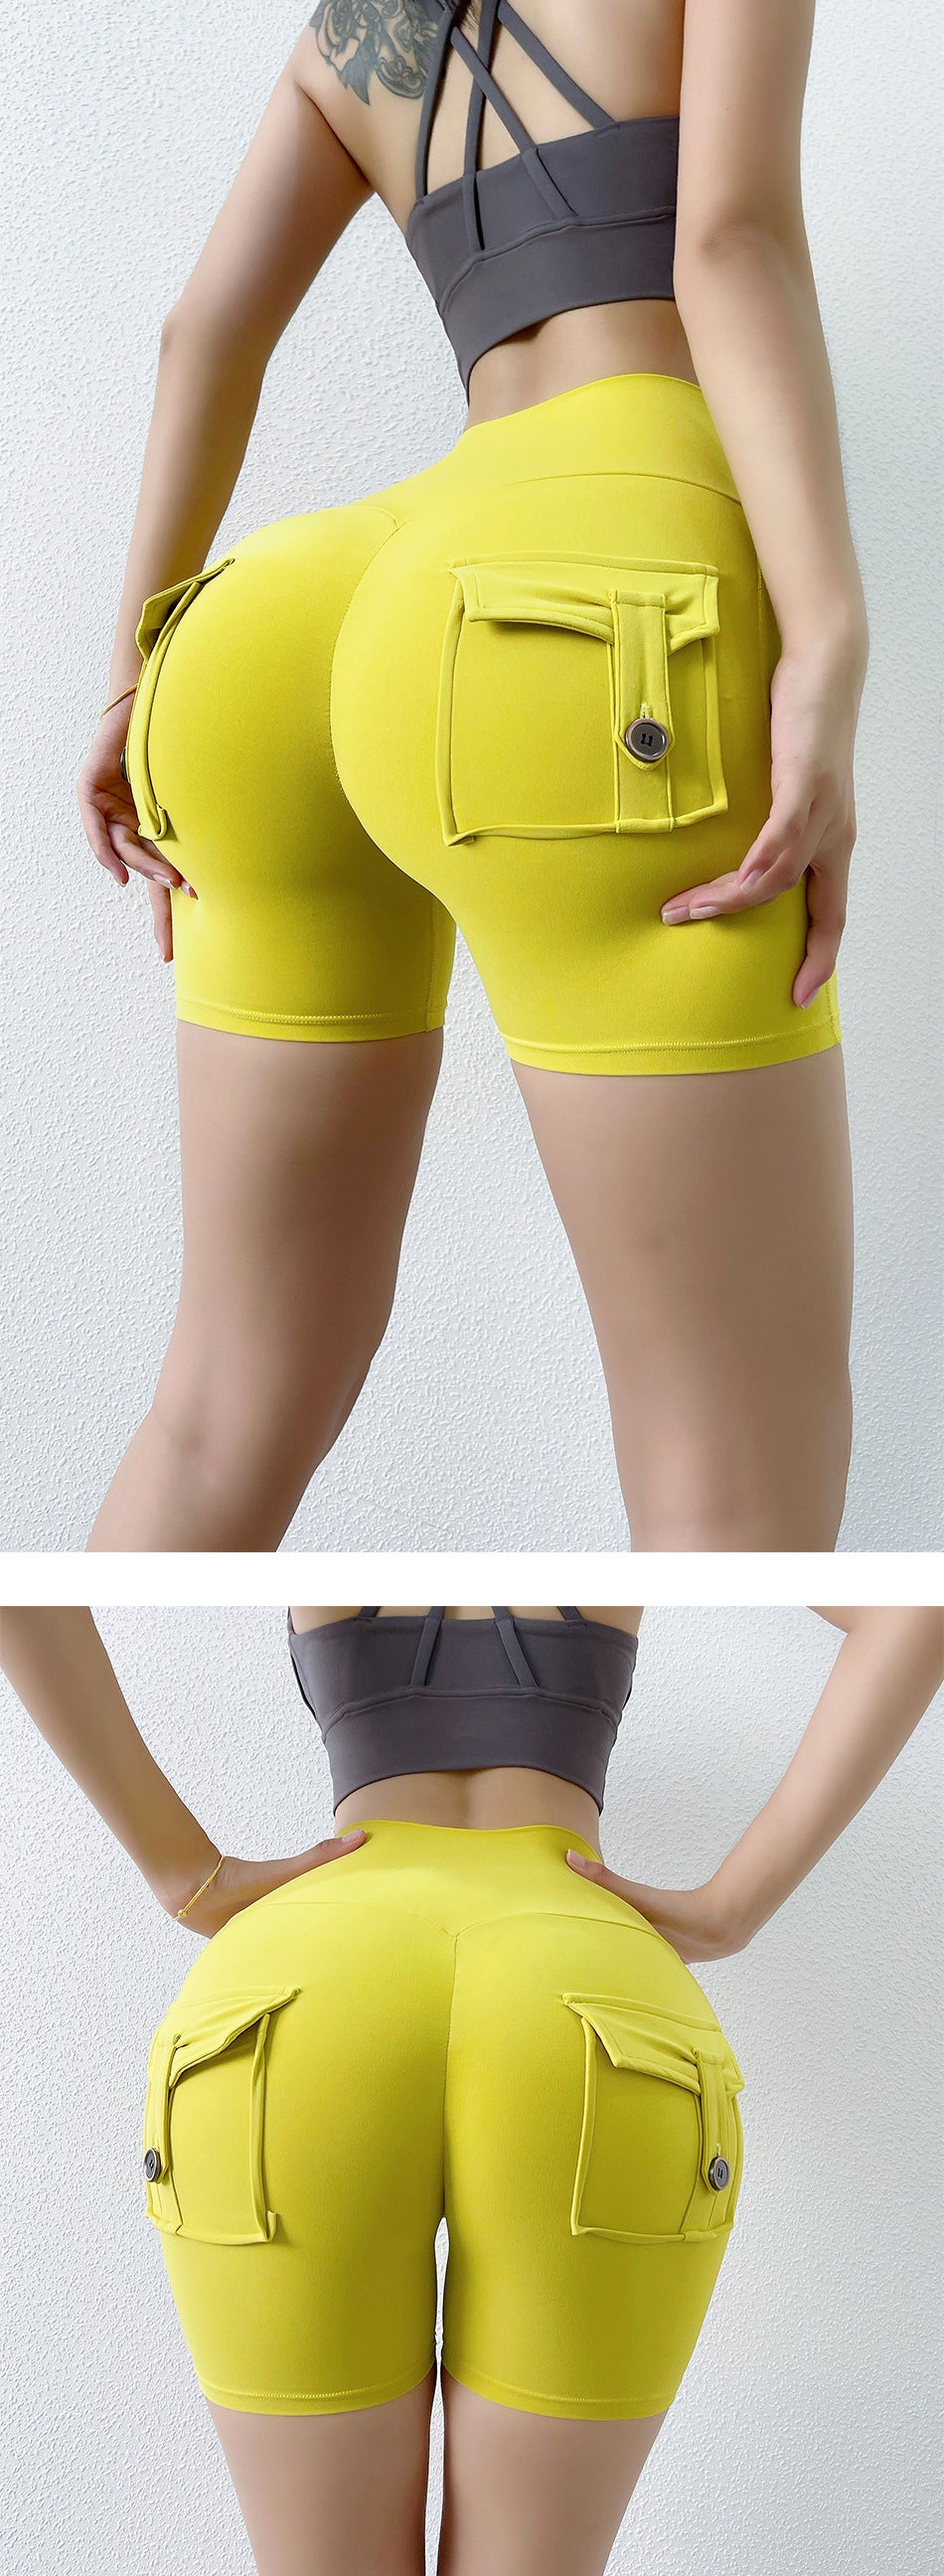 Internet Celebrity Nude Feel Pocket Shorts Yoga Pants